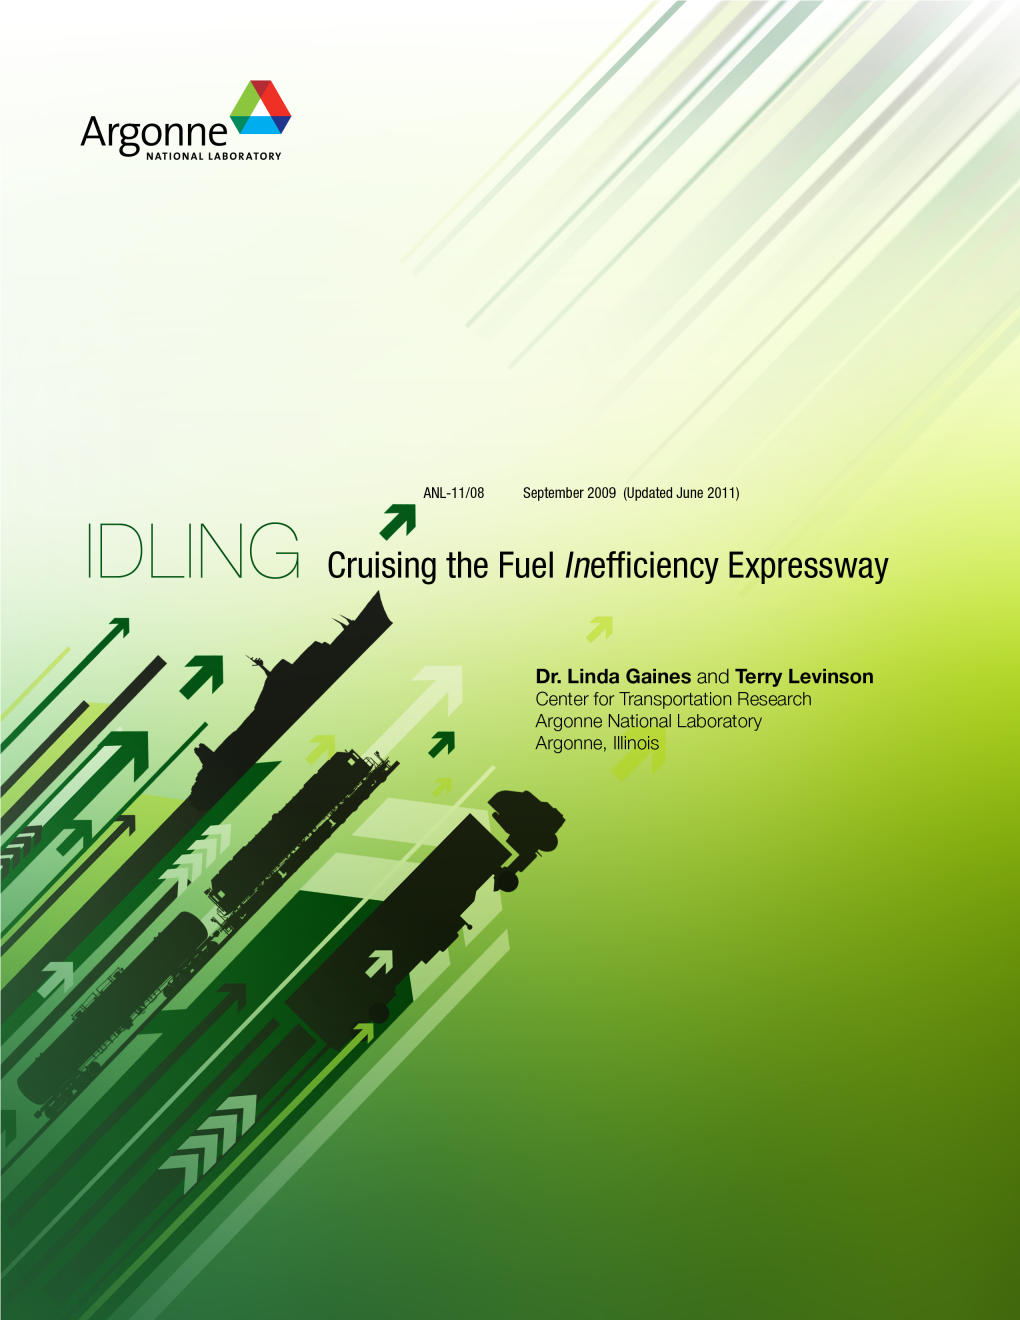 Idling: Cruising the Fuel Inefficiency Expressway